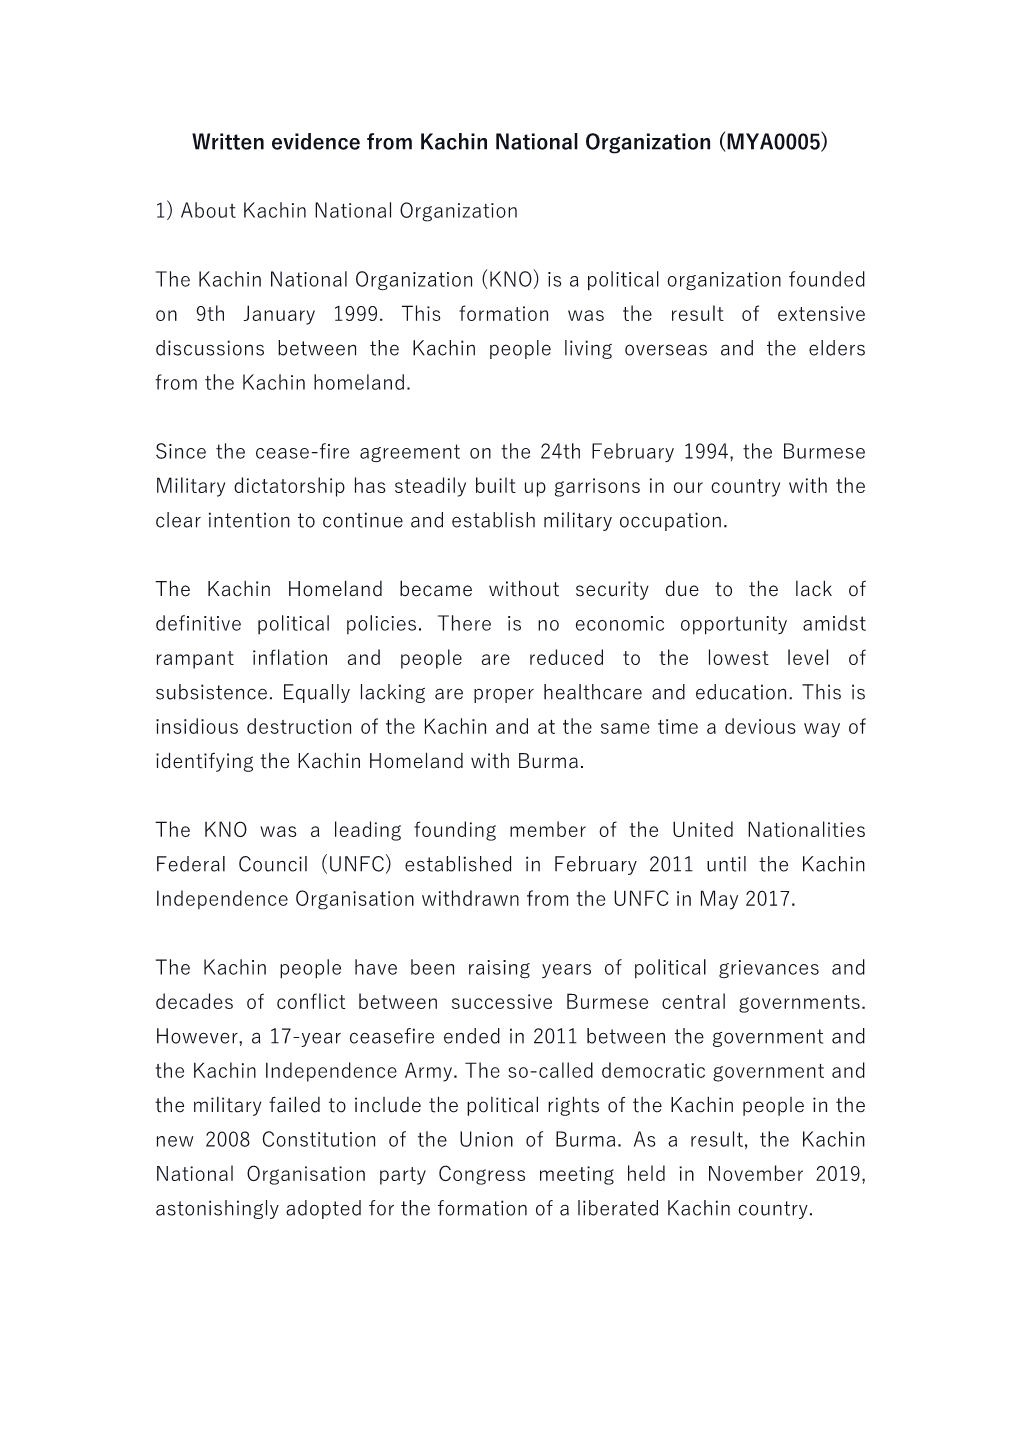 Written Evidence from Kachin National Organization (MYA0005)